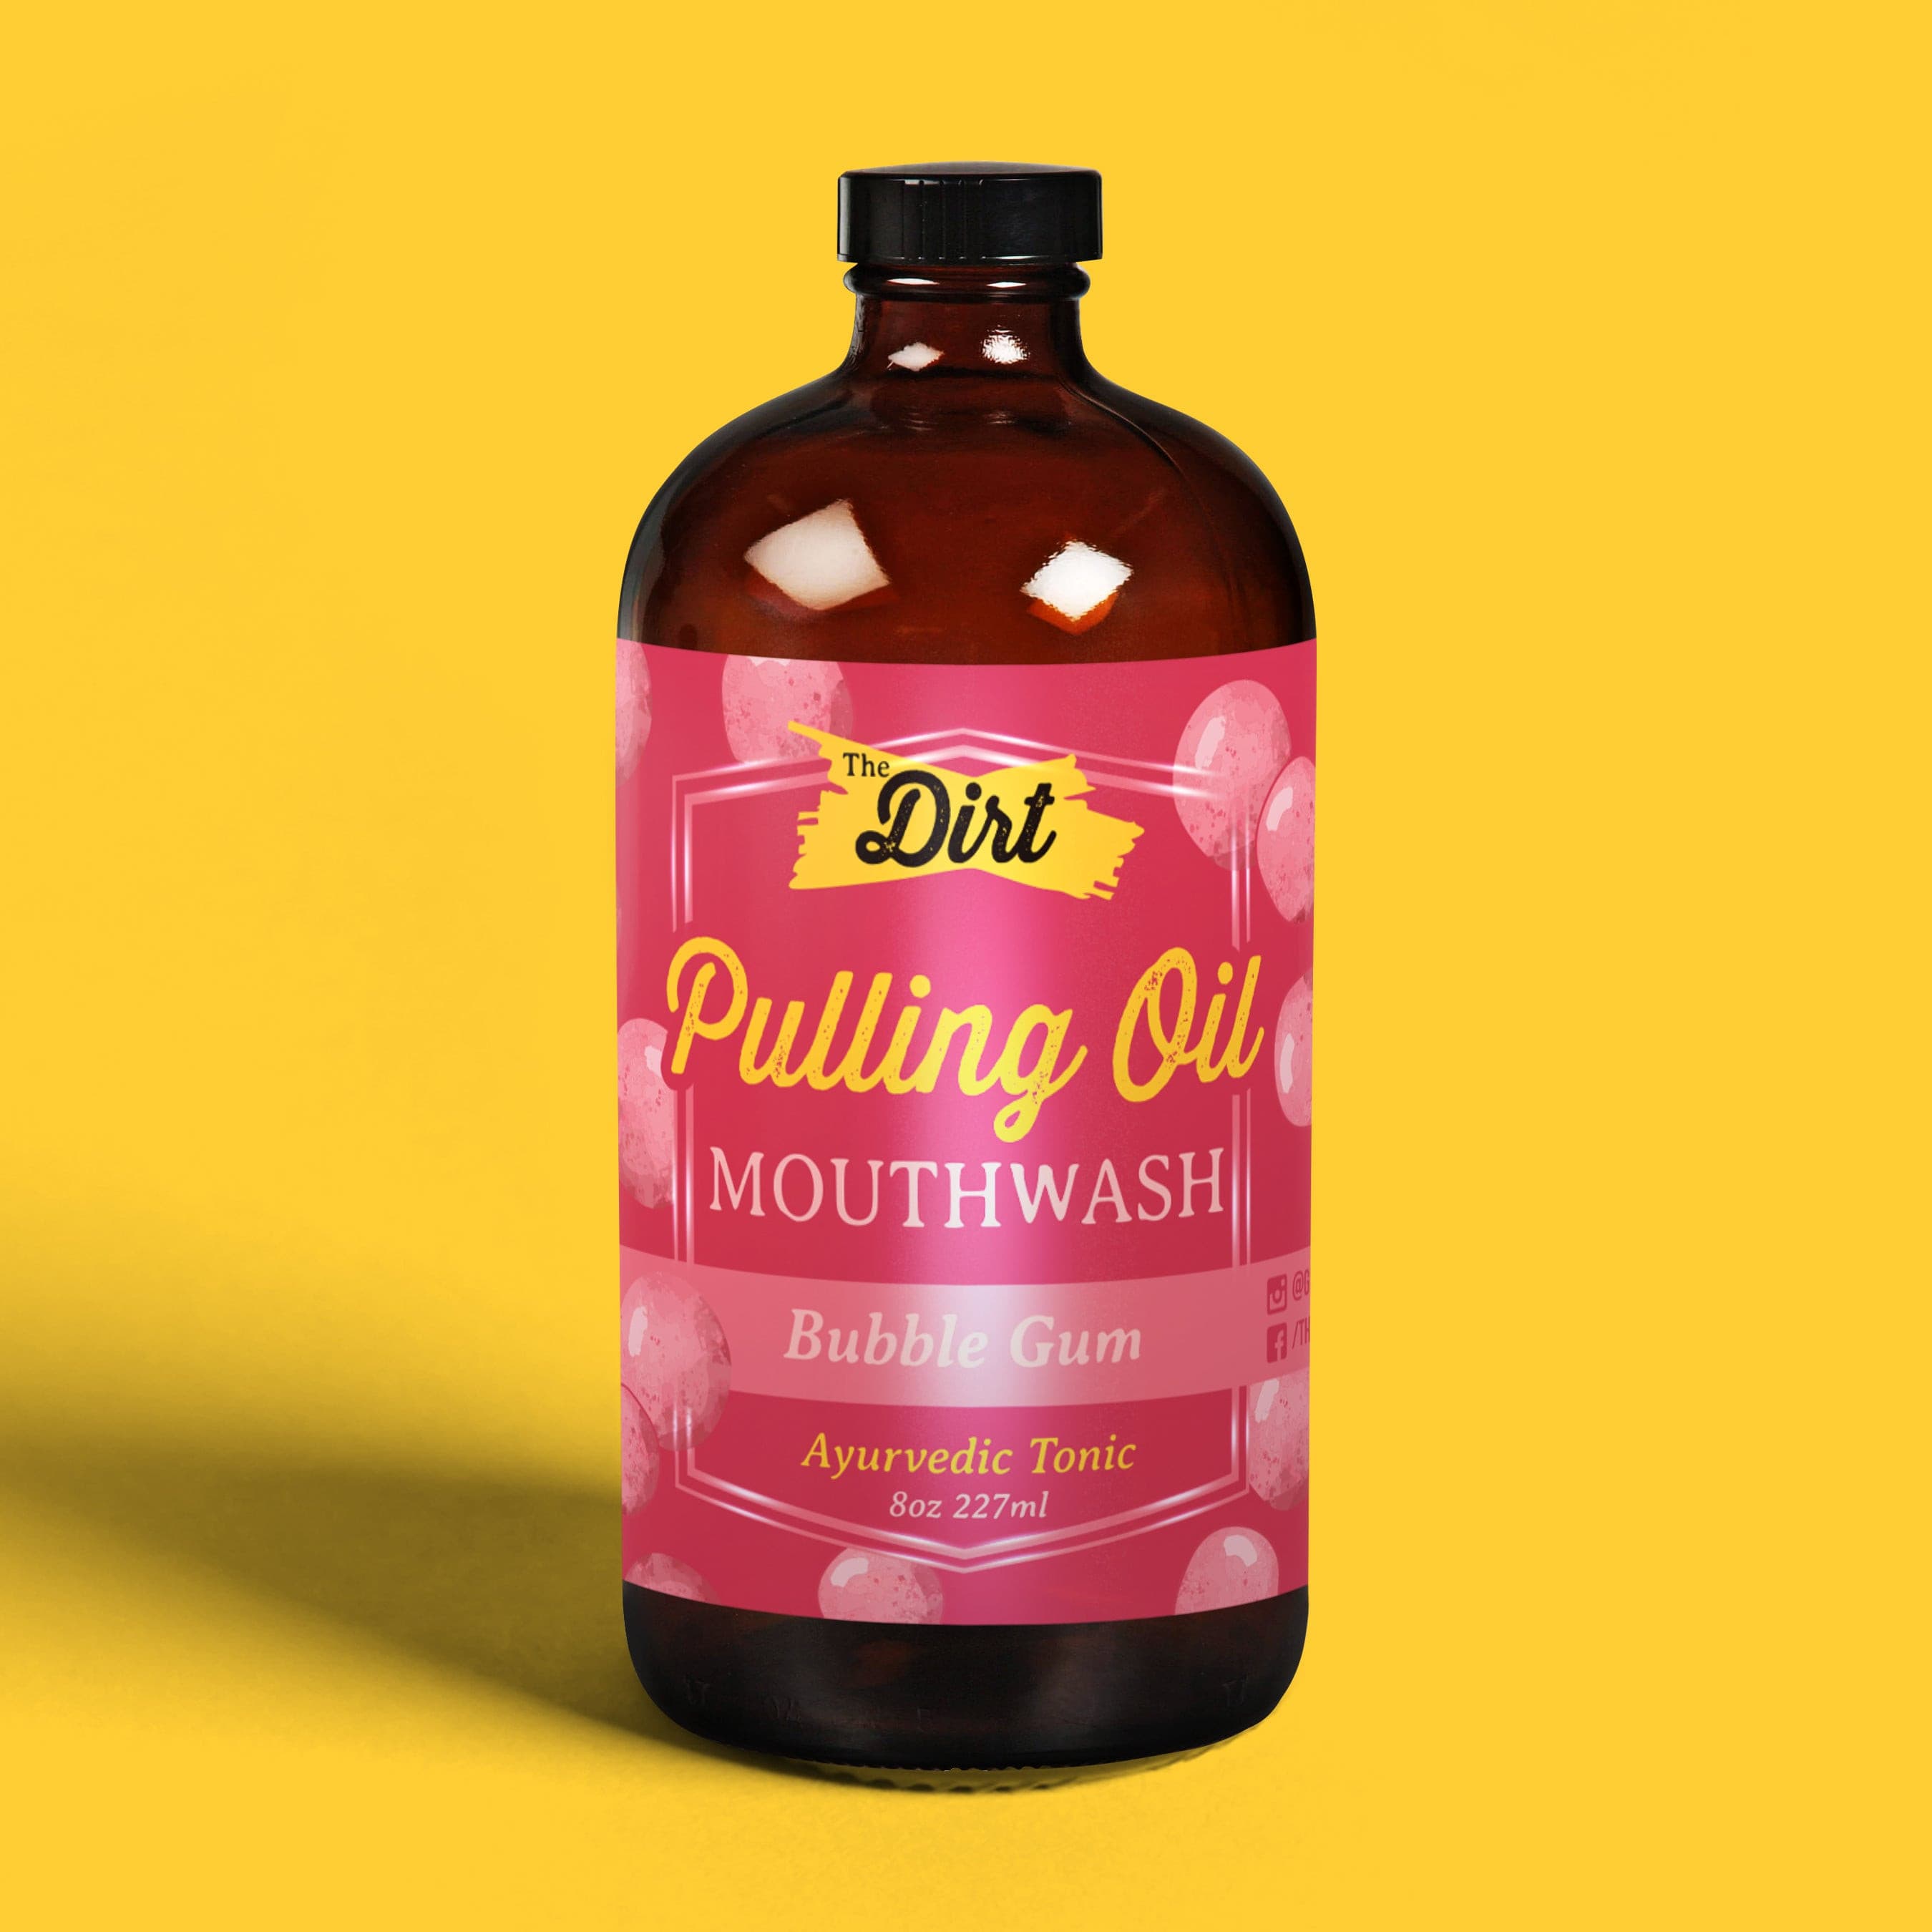 Pulling Oil Mouthwash - The Dirt - Super Natural Oral Care 8oz / Bubblegum Oral Care